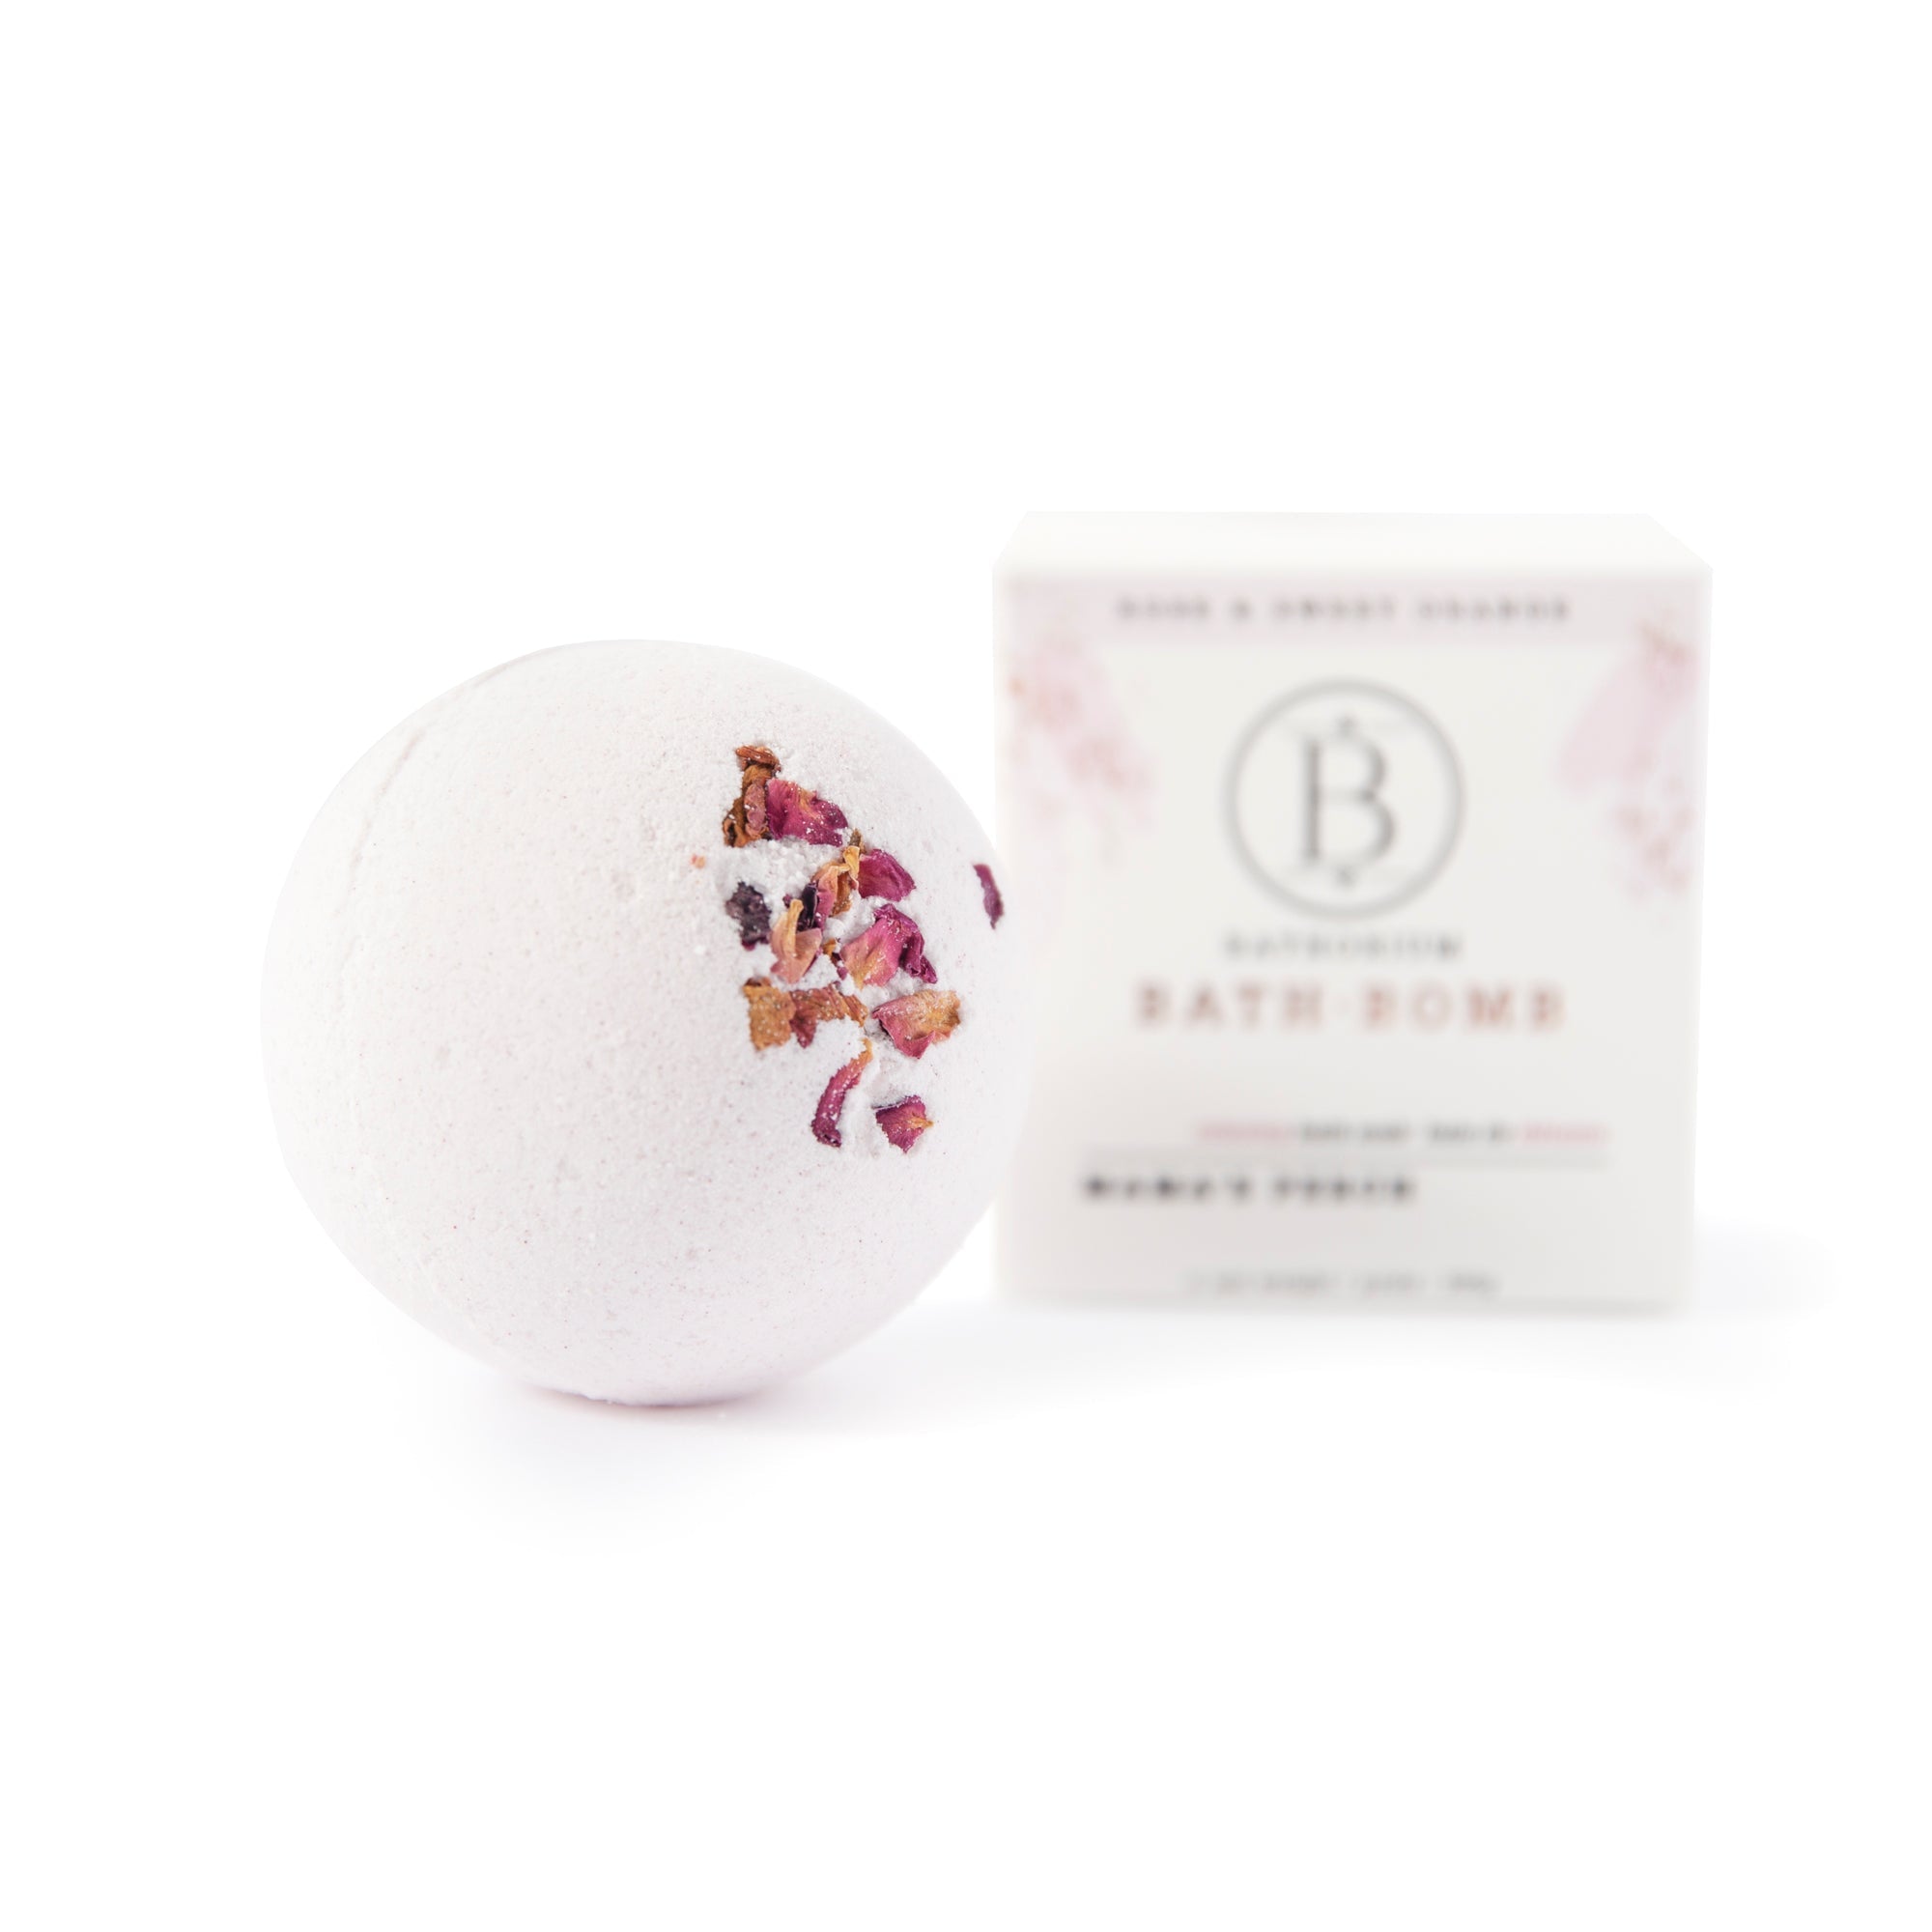 Bathorium - Bathorium Mama&#39;s Perch Bath Bomb - ORESTA clean beauty simplified